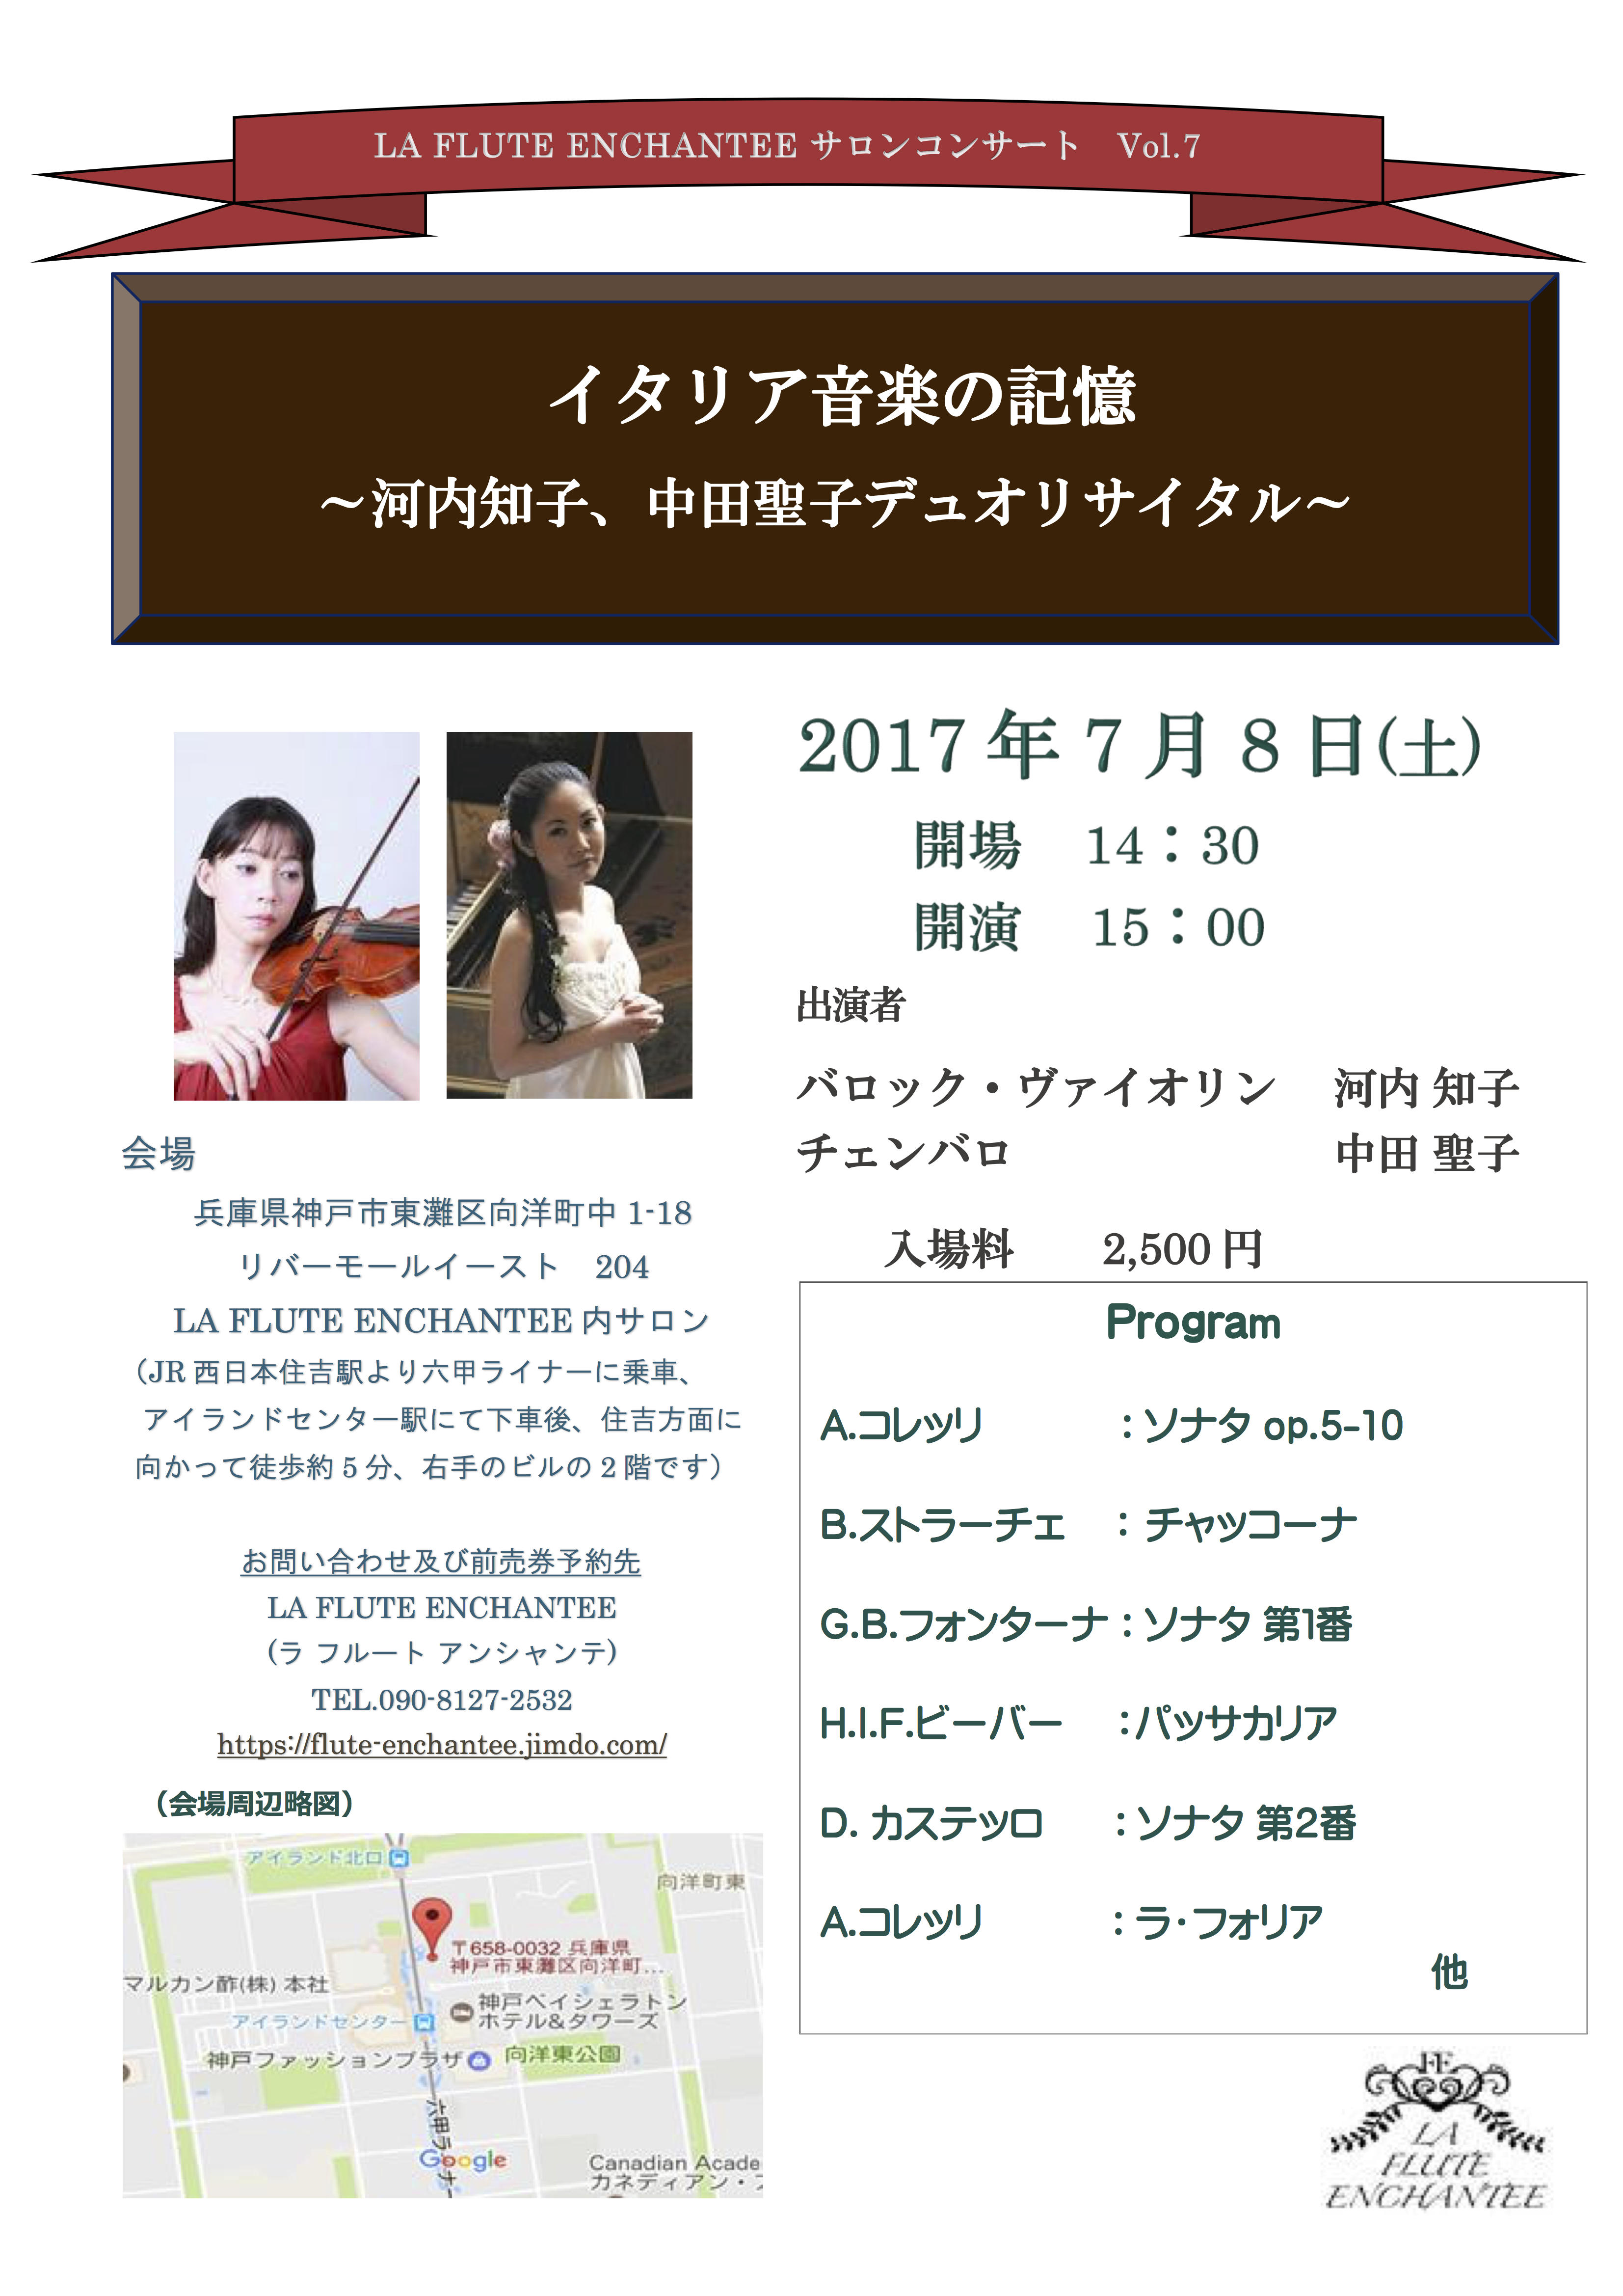 http://www.klavi.com/jp/concert/20170708.jpg